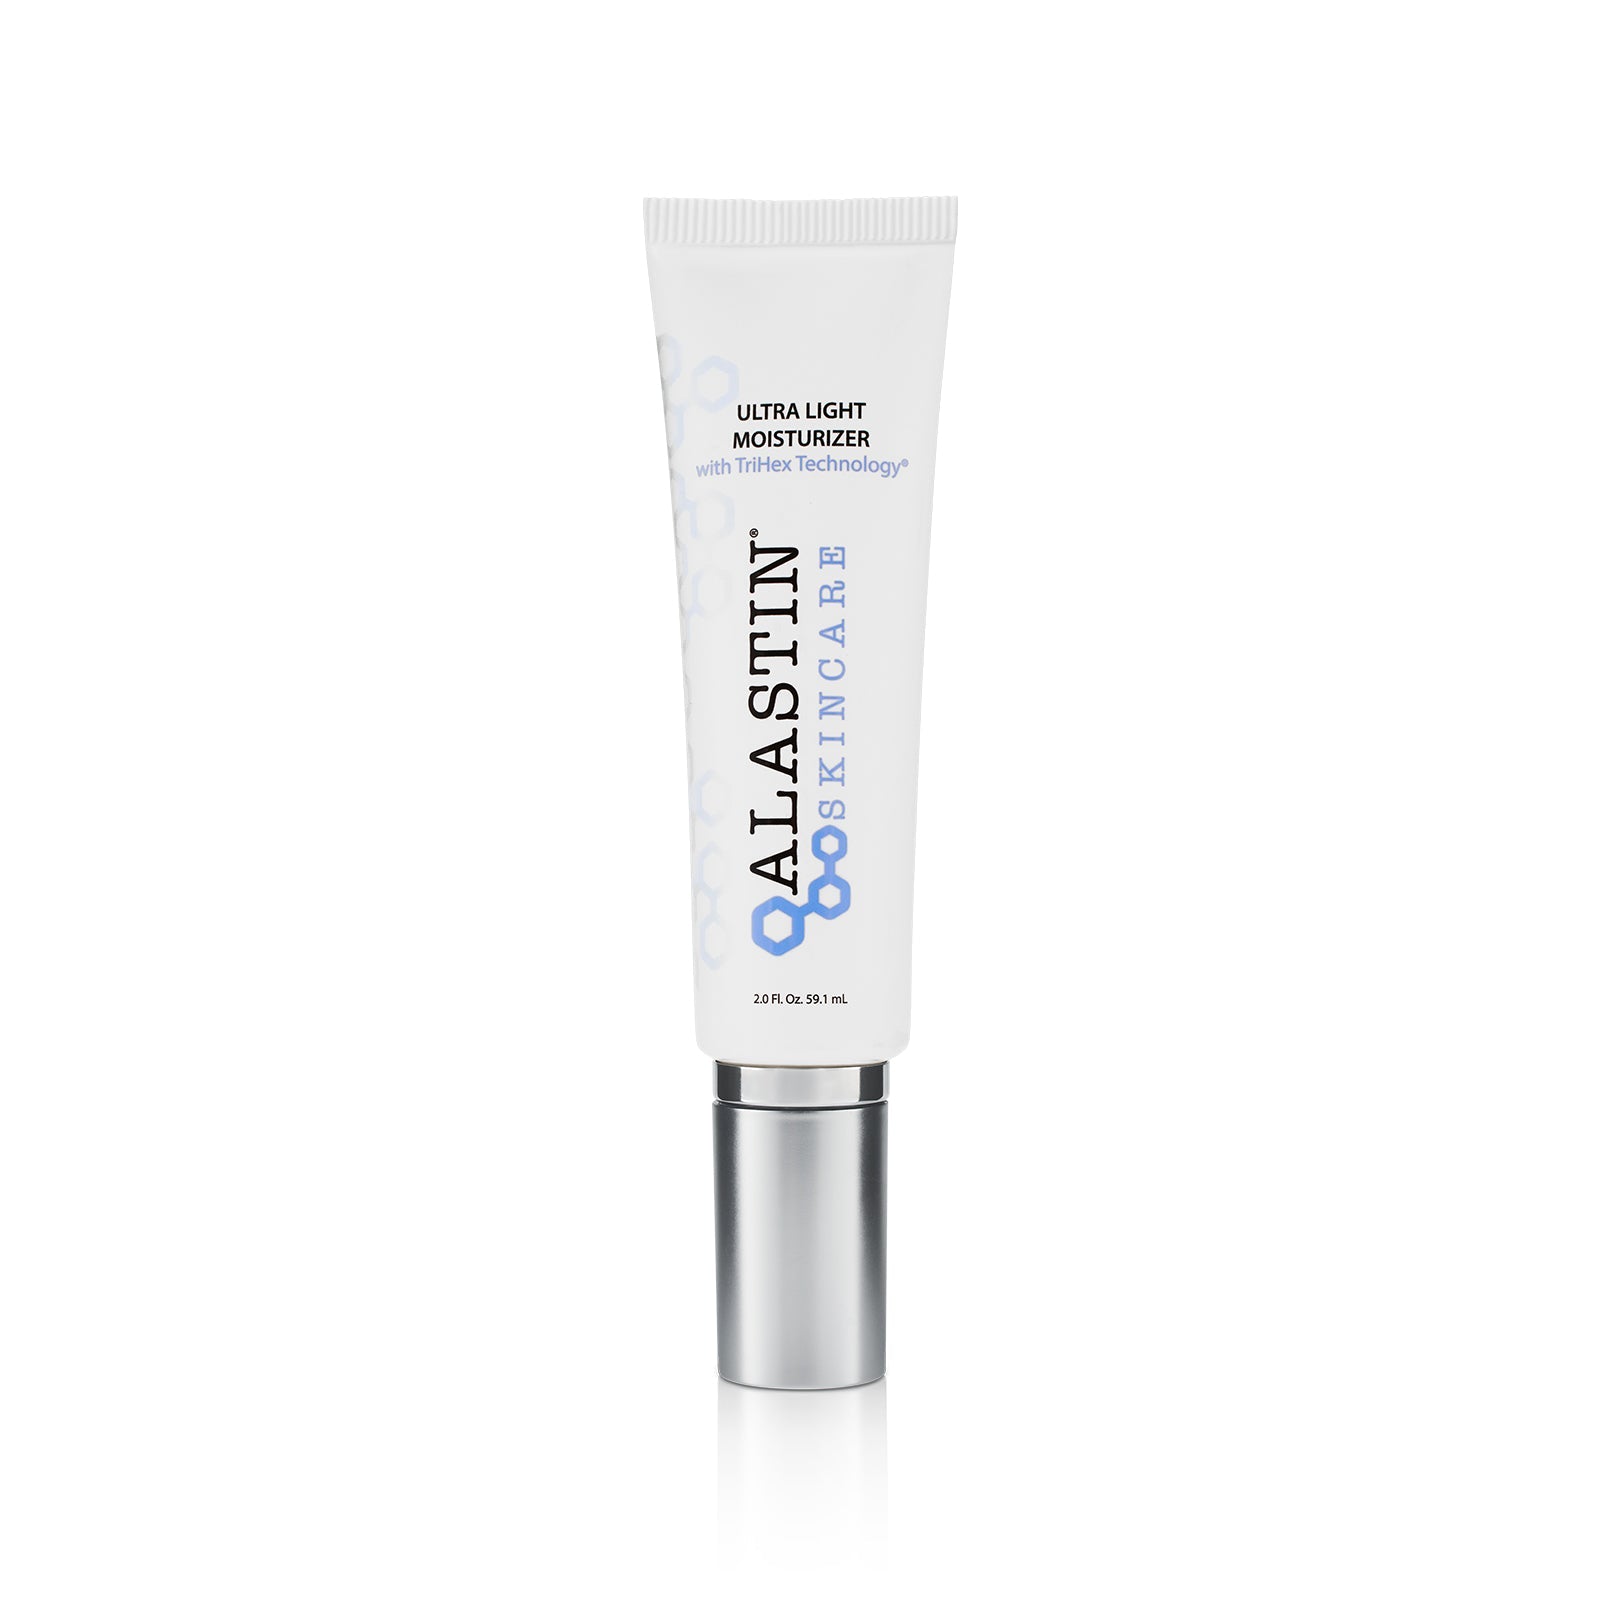 ALASTIN Skincare Ultra Light Moisturizer moisturizer anti-aging skincare hudson valley